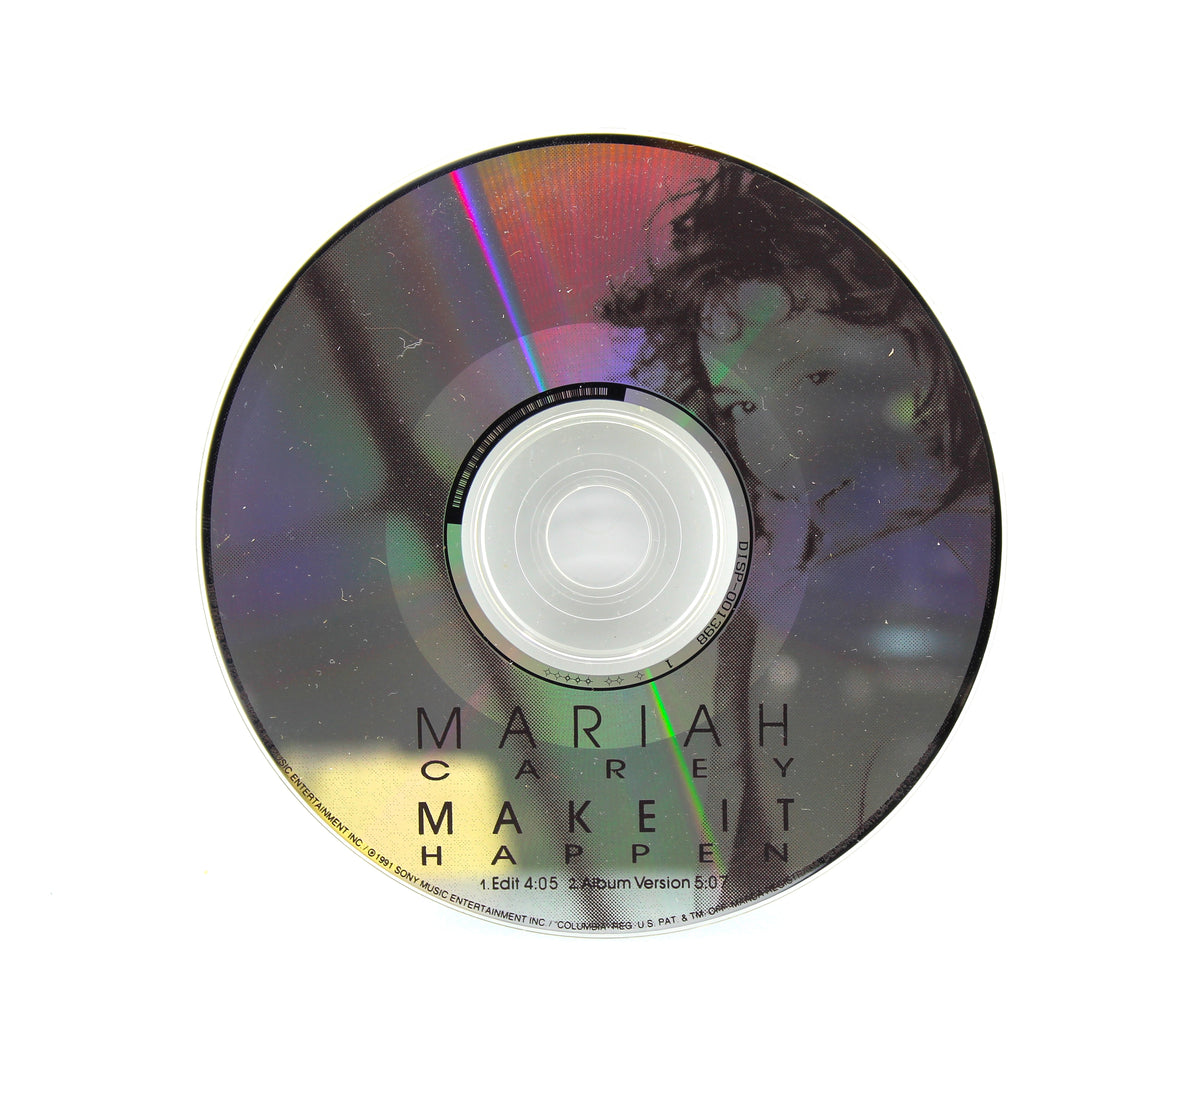 Mariah Carey, Make It Happen, CD Single Promo, US 1992 (CD 641)